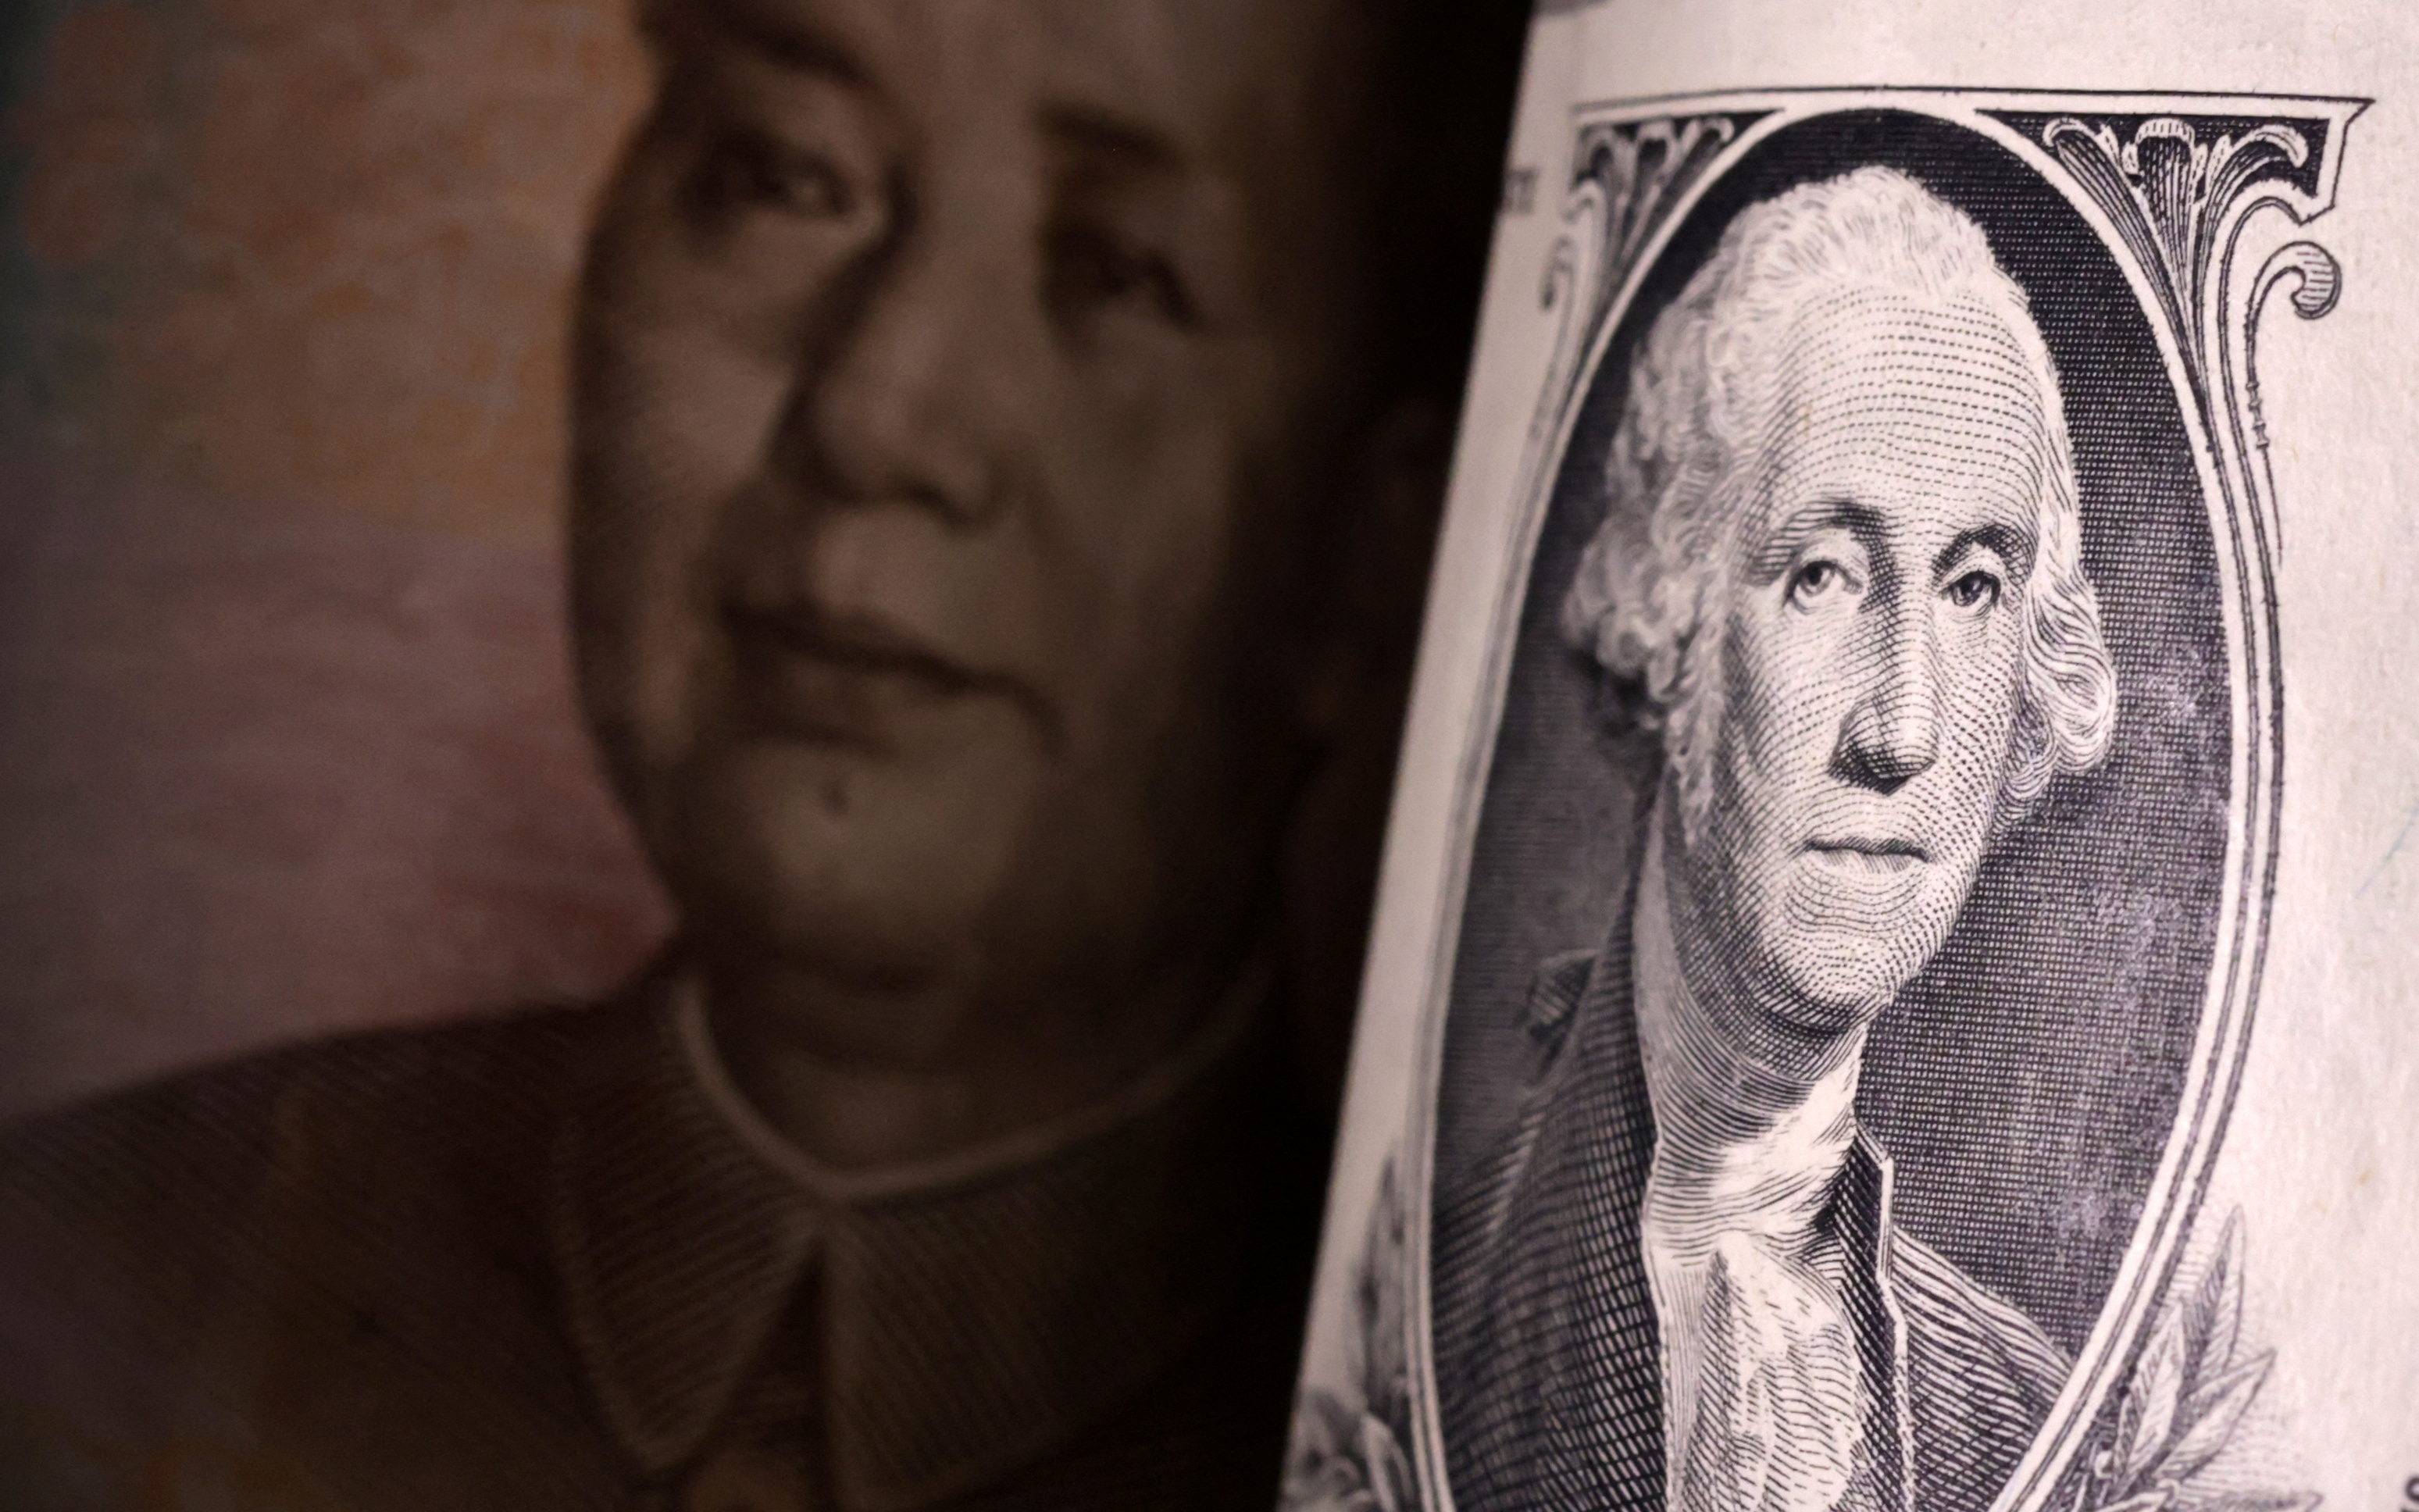 Illustration shows U.S. dollar and Chinese Yuan banknotes